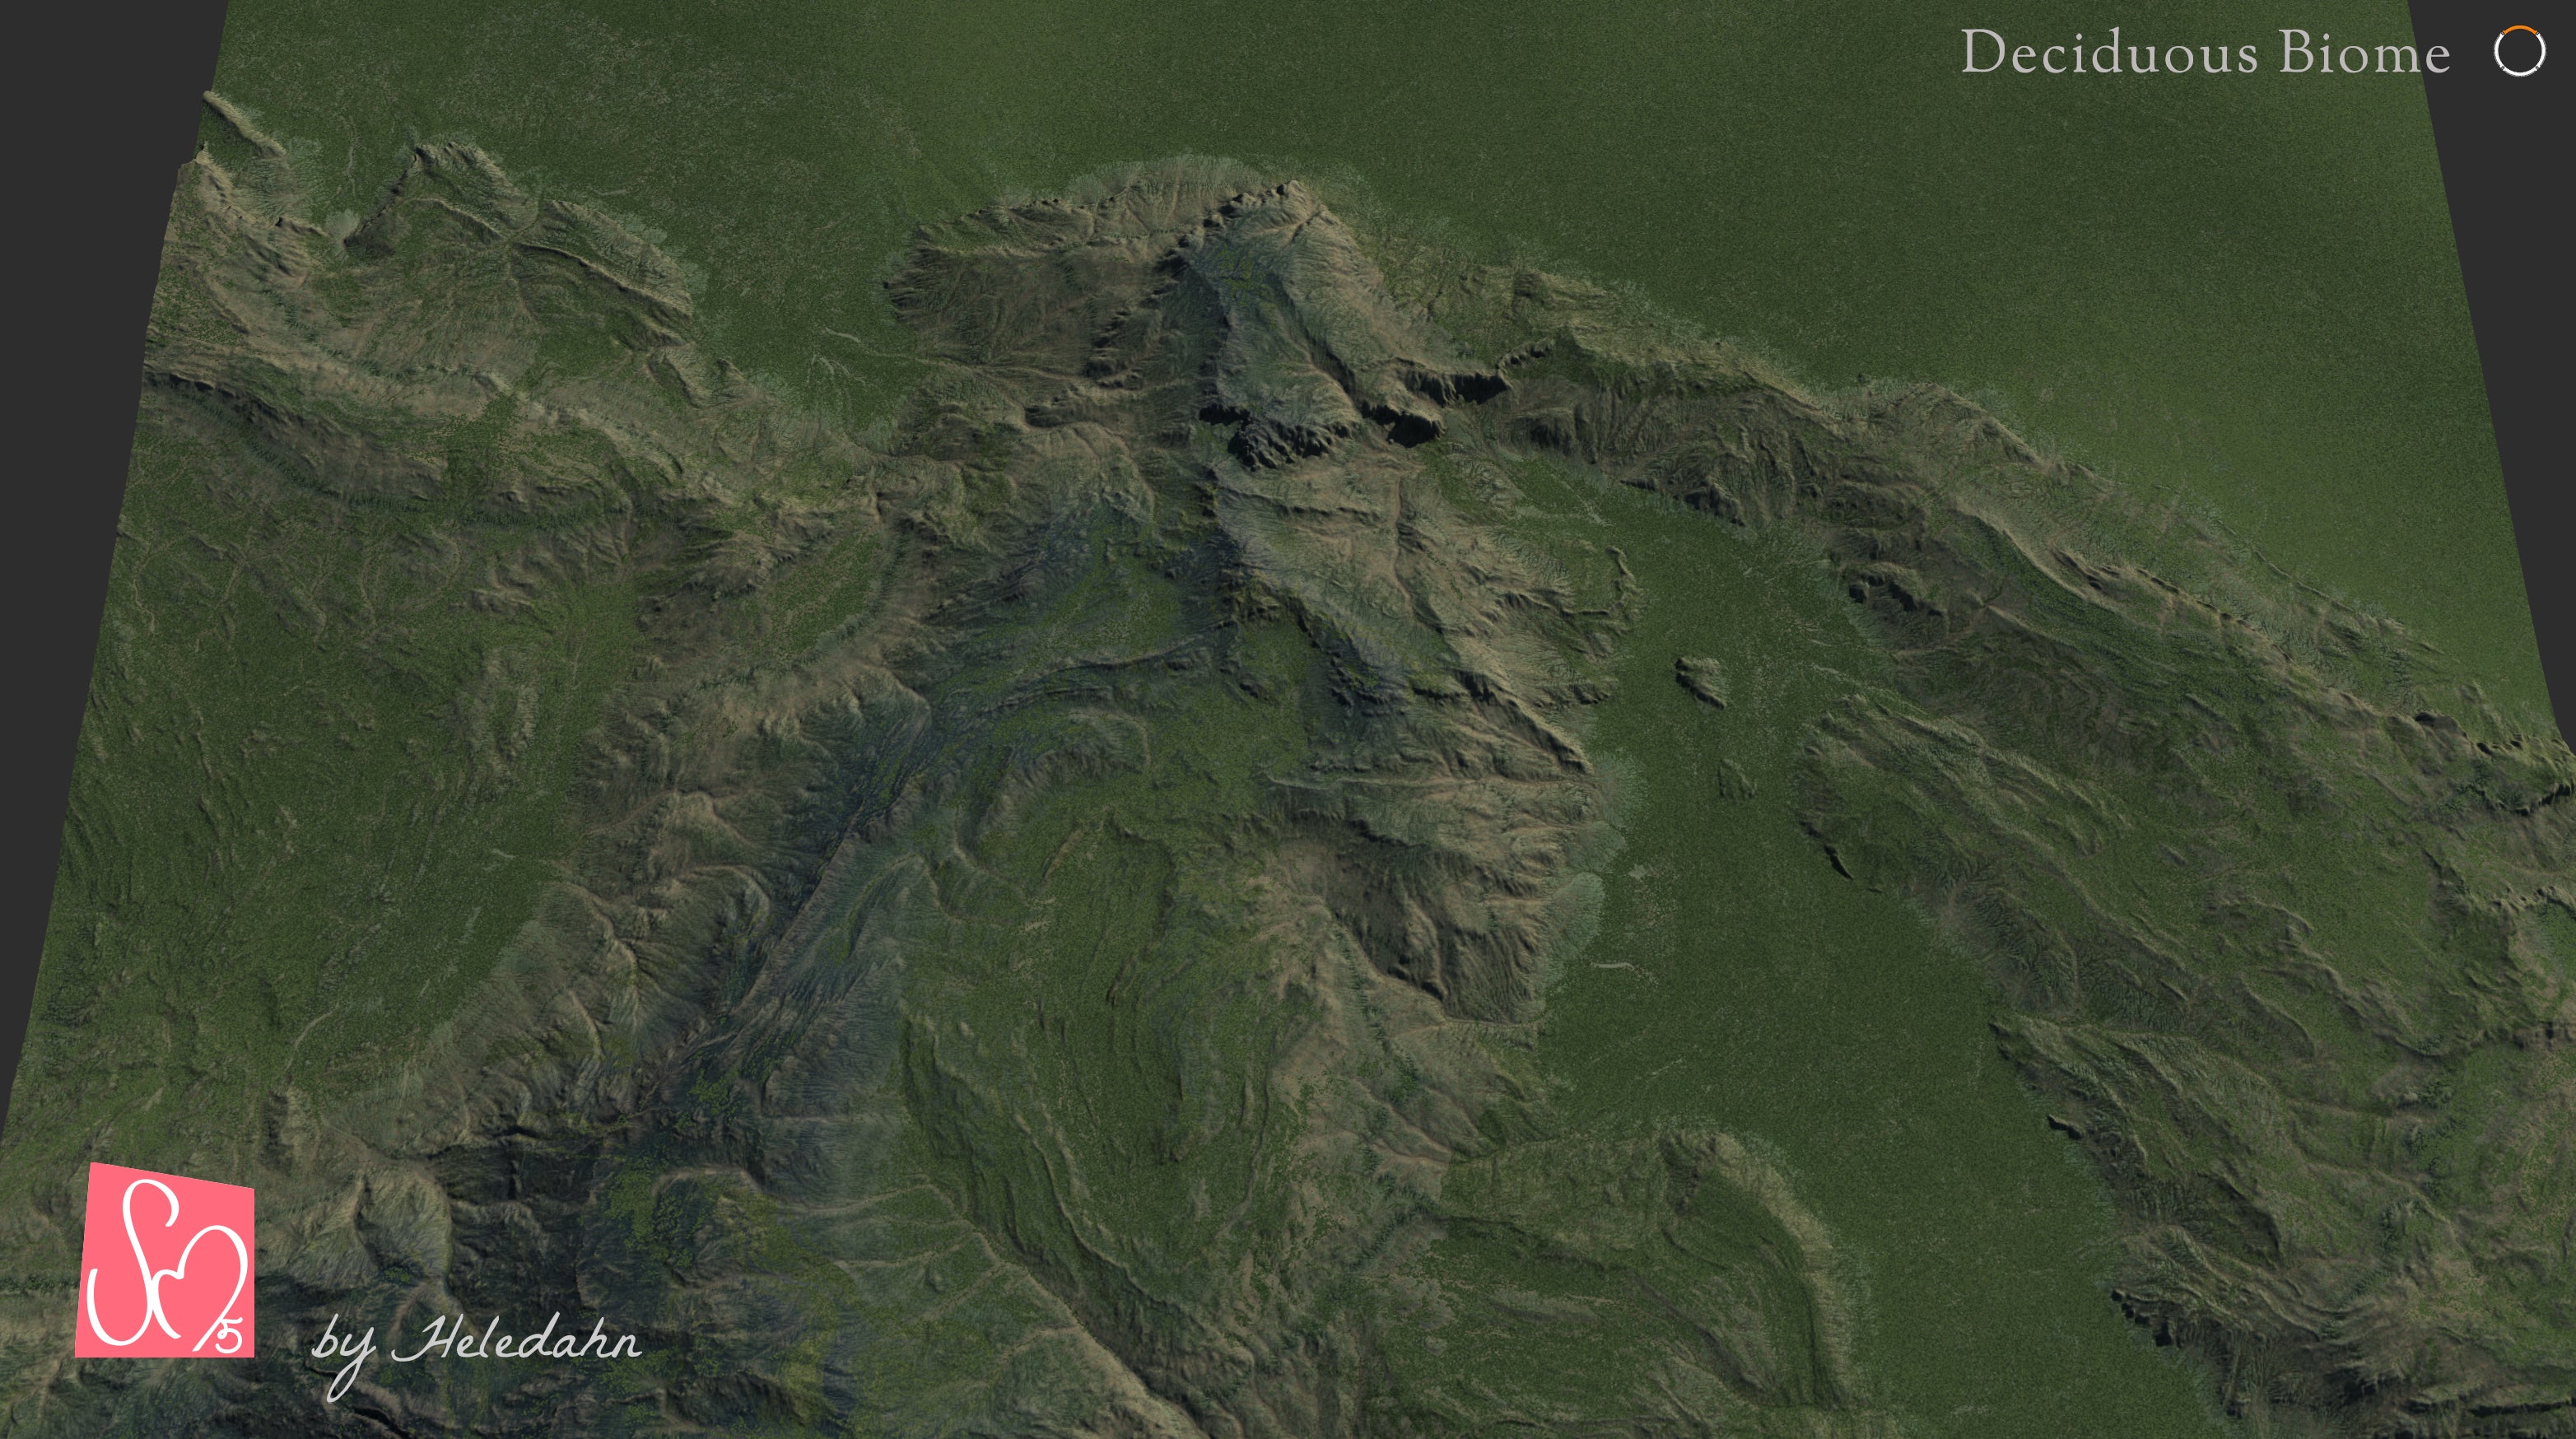 Gaea deciduous biome terrain 3D model by Heledahn